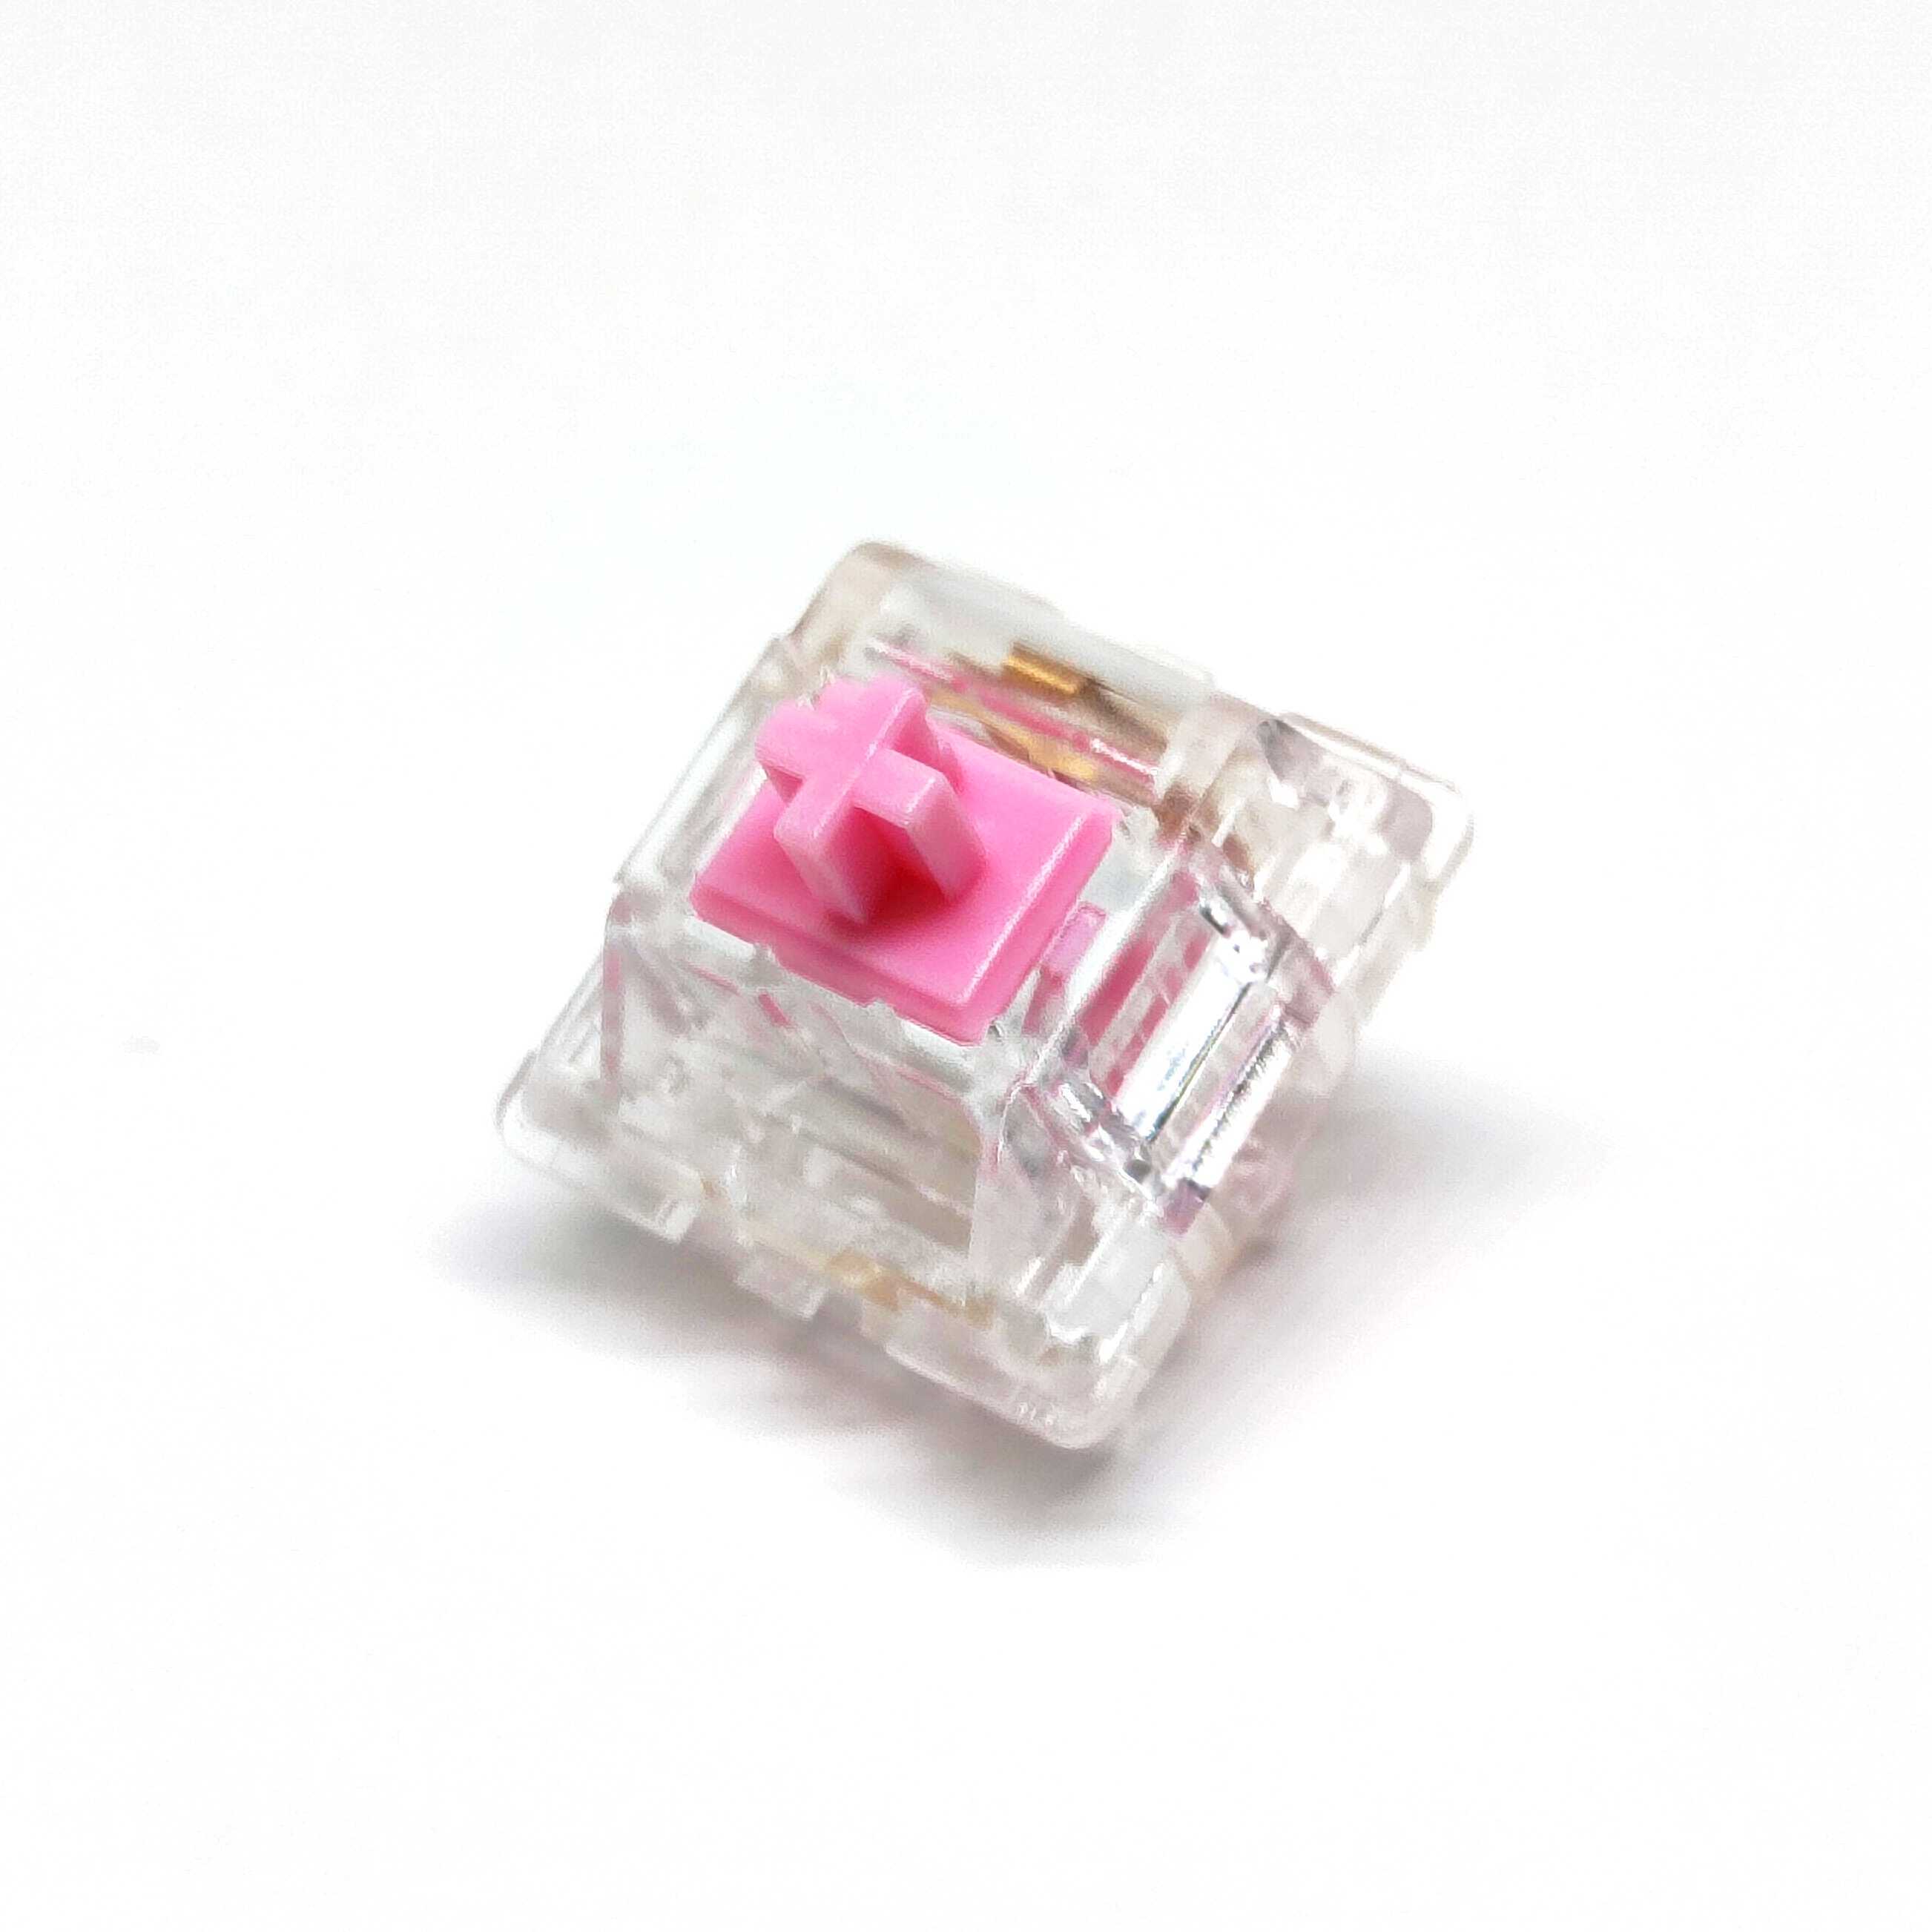 Everglide Sakura Pink V2 37g Switches / Linear